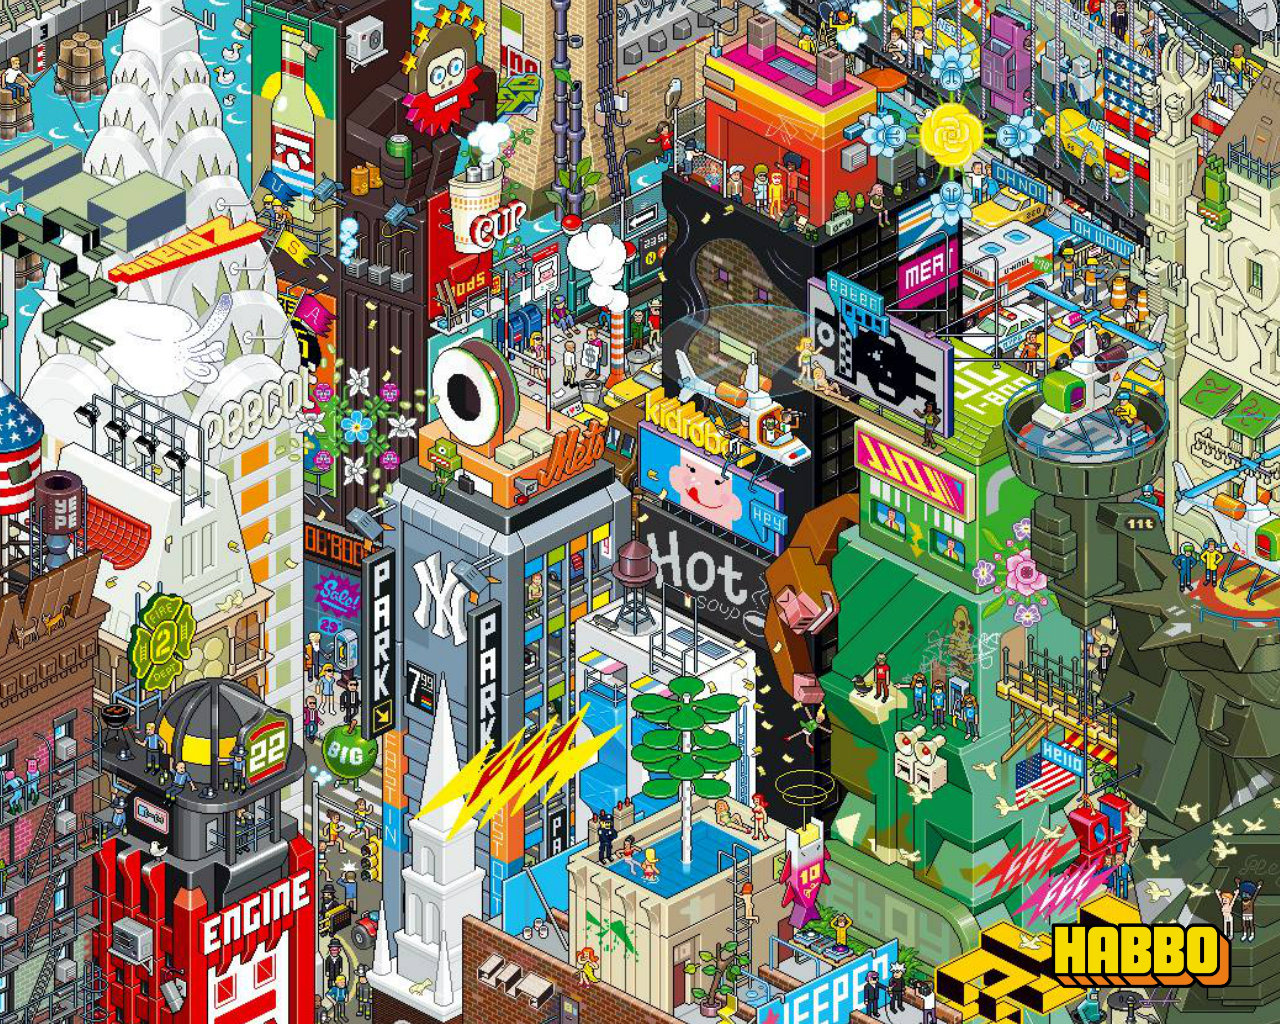 habbo wallpaper,product,supermarket,convenience store,urban design,electronics